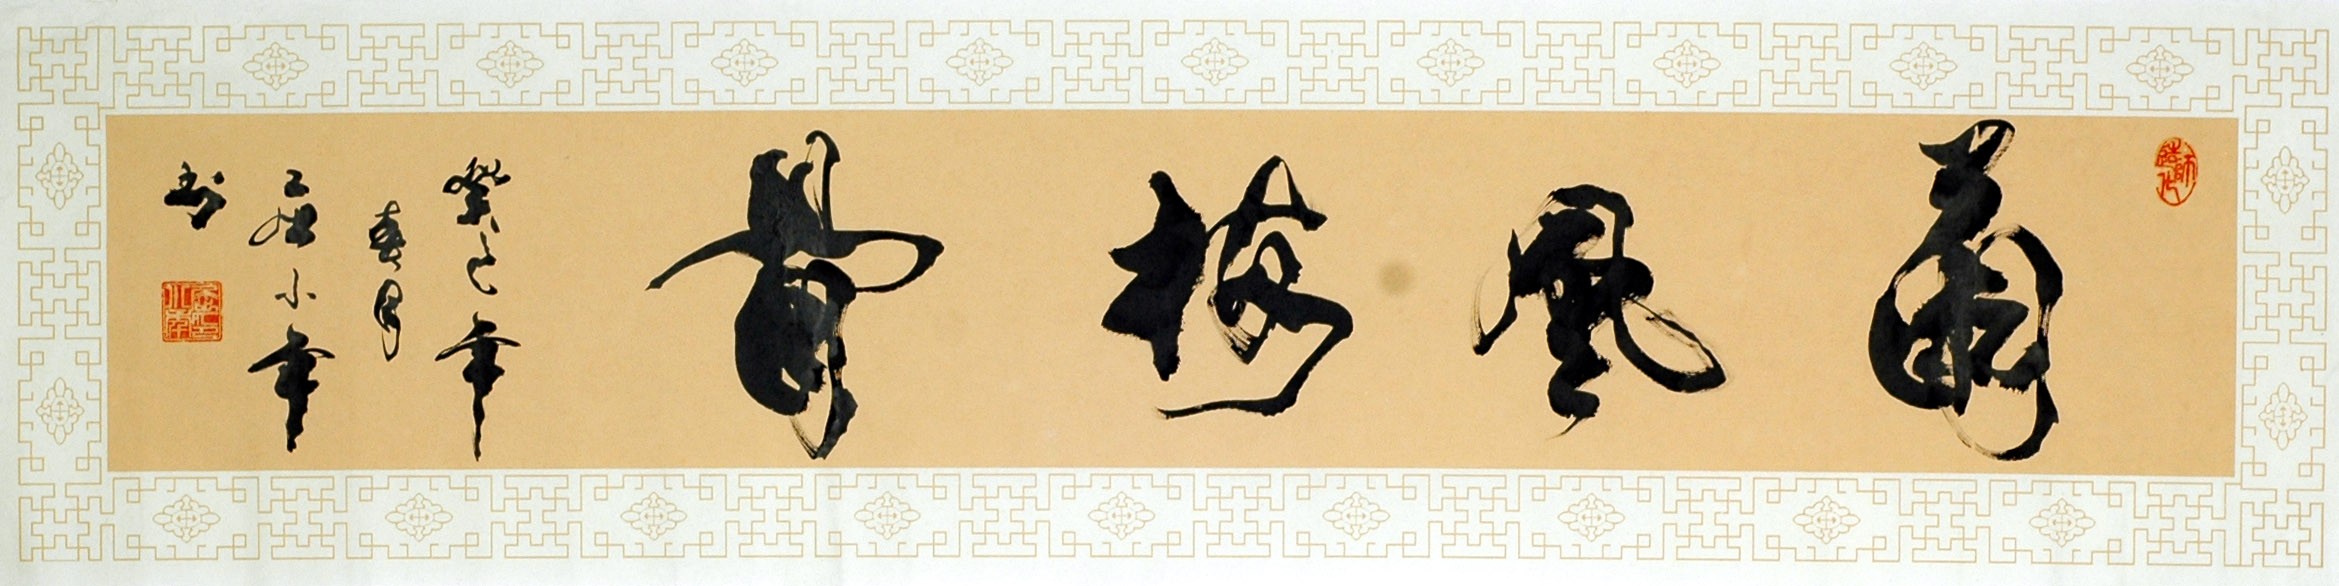 Chinese Cursive Scripts Painting - CNAG009971